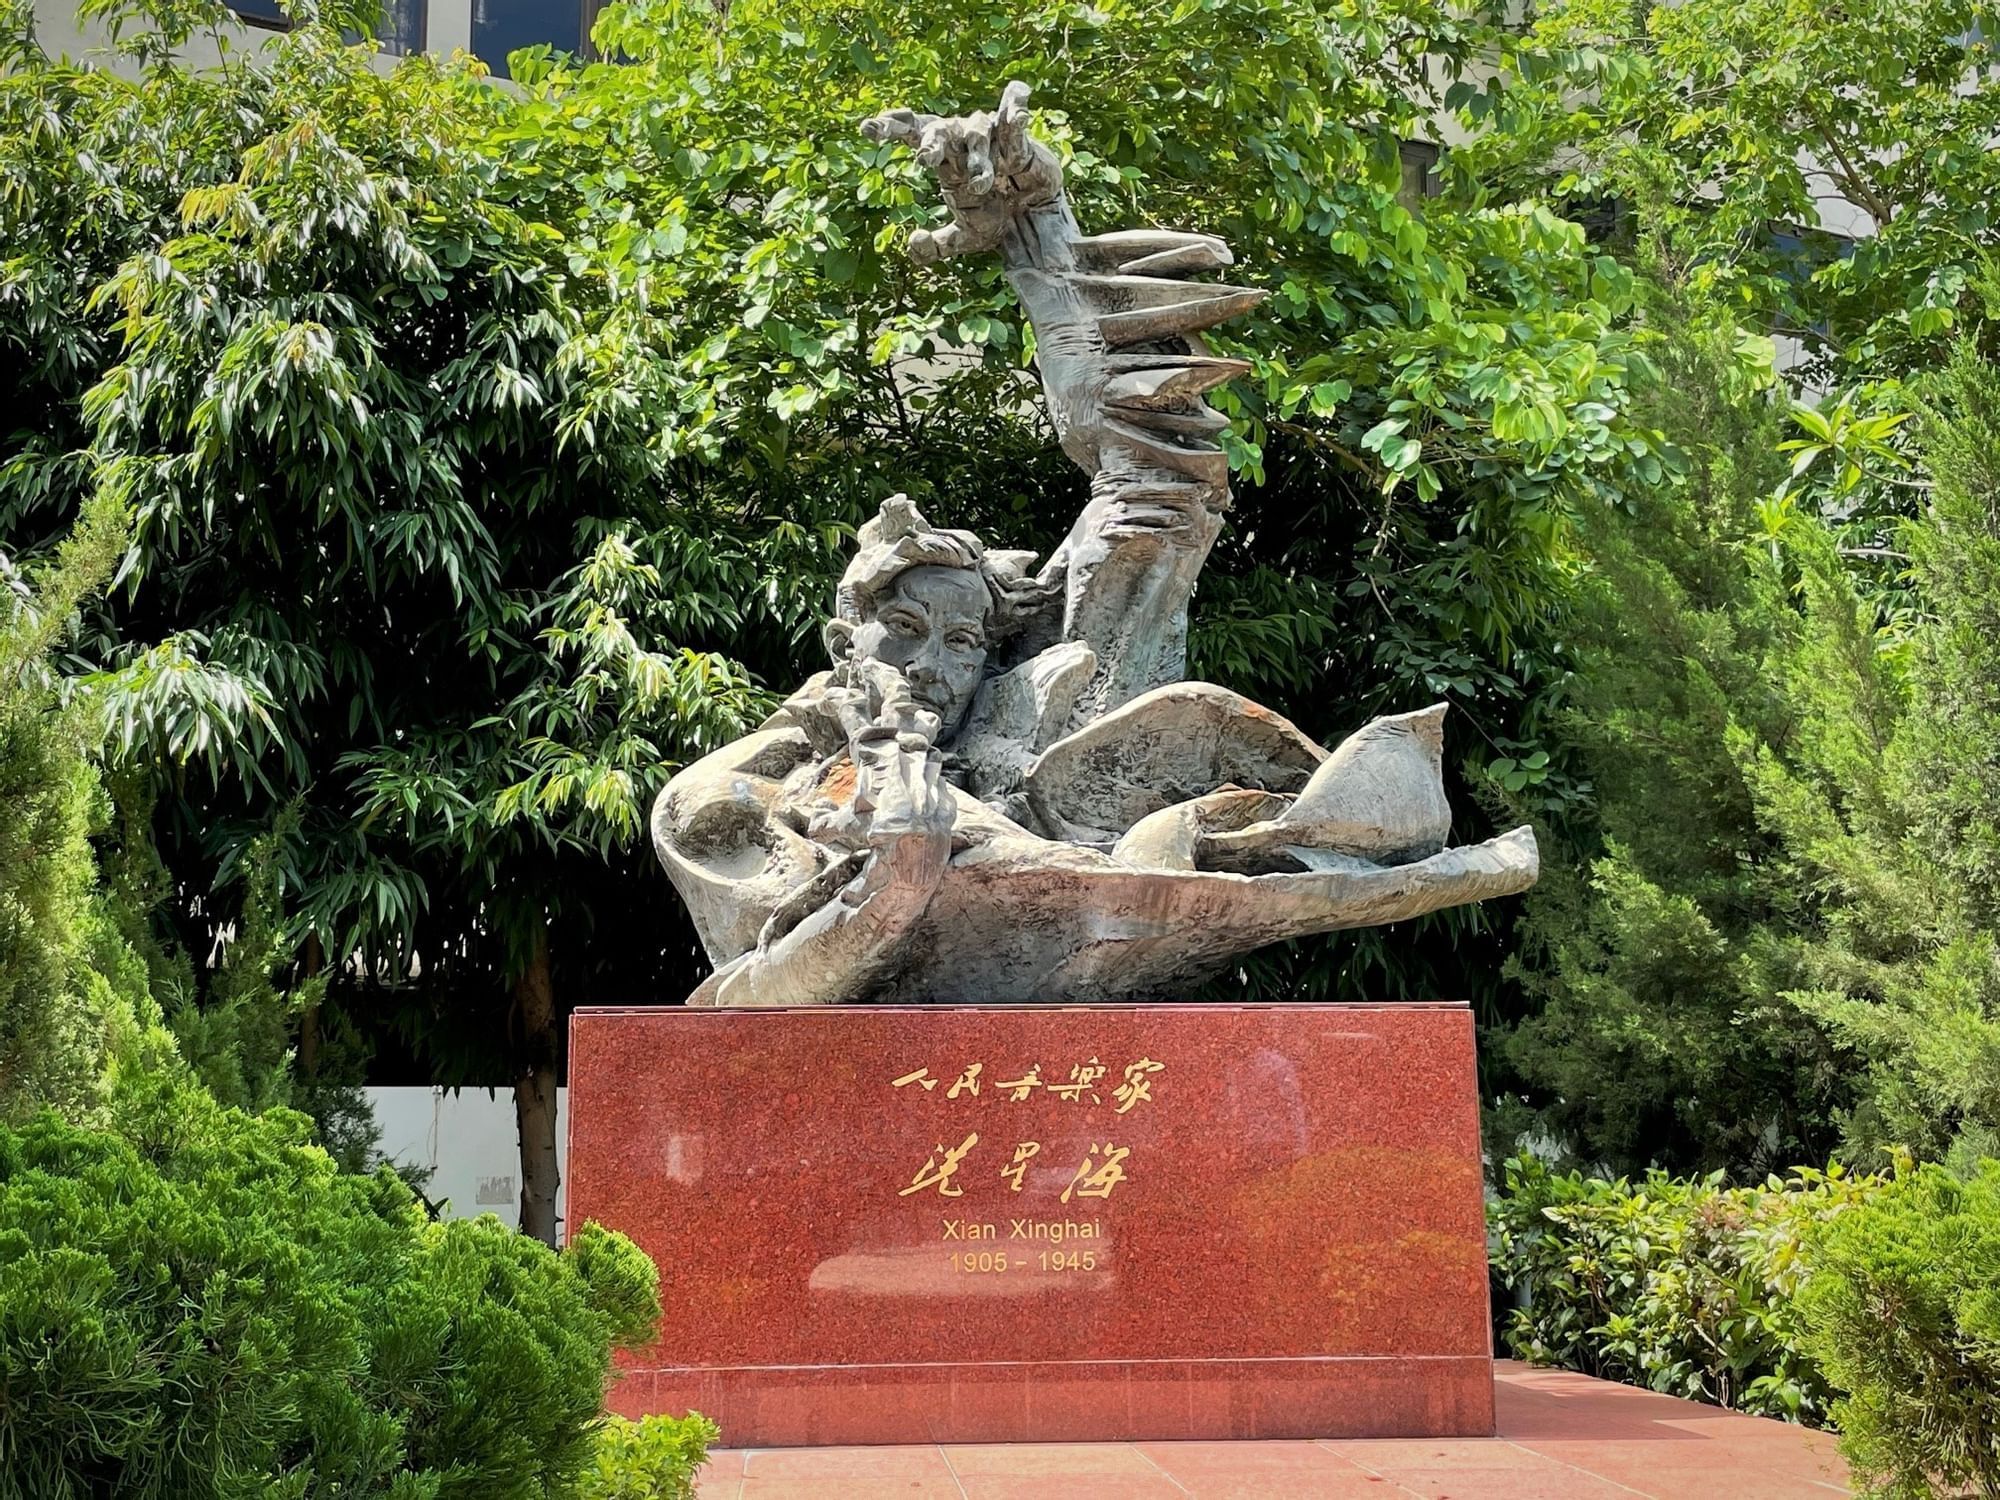 Closeup of The Statue of Xian Xinghai at Artyzen Grand Lapa